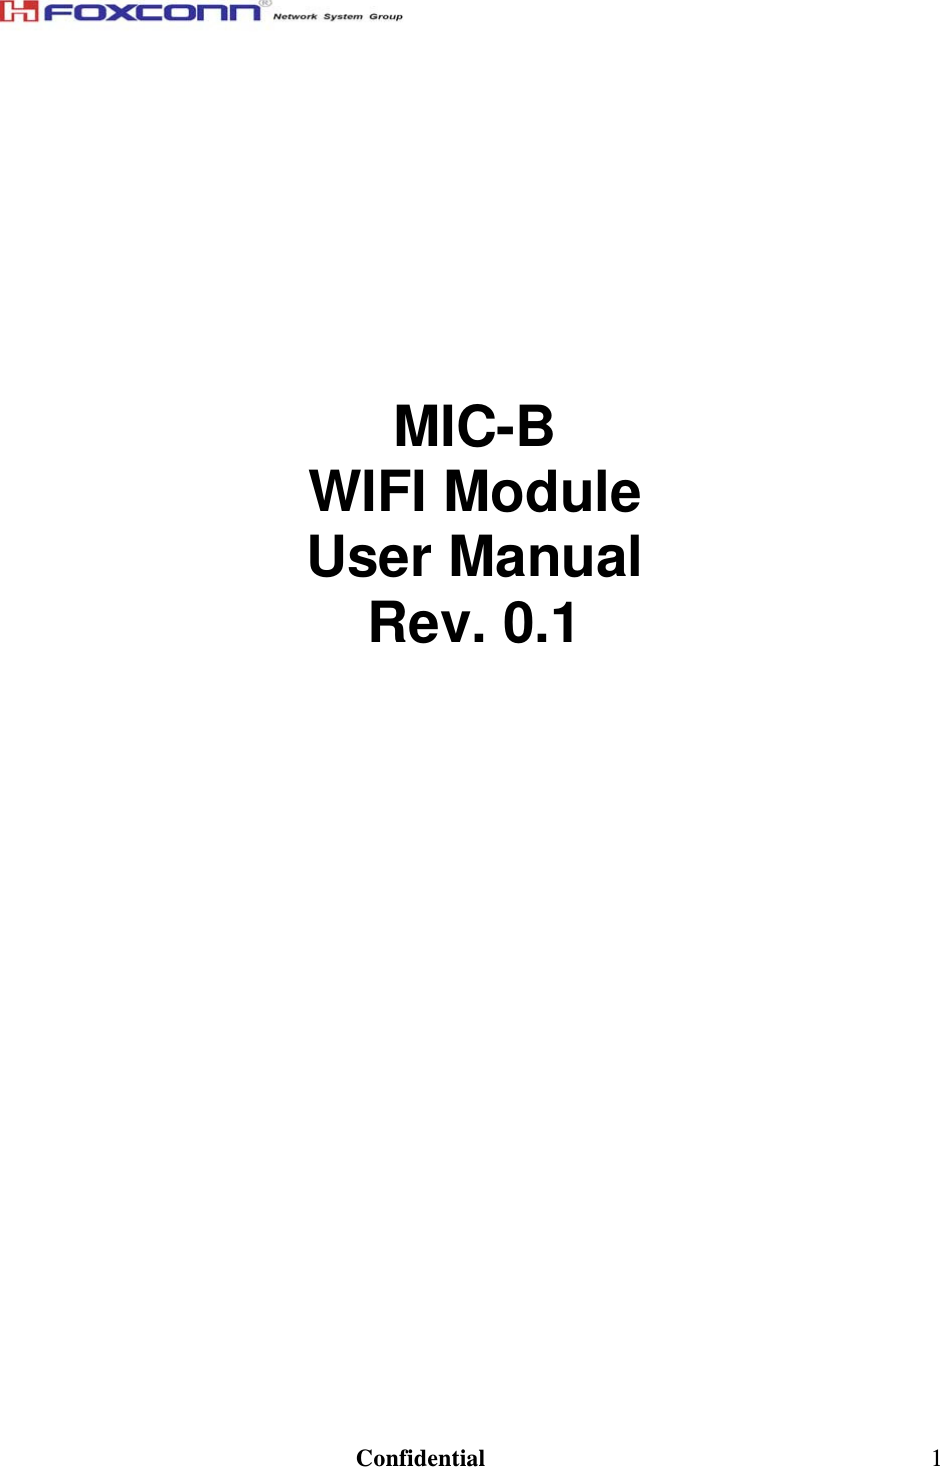                                                                               Confidential  1                                                       MIC-B WIFI Module  User Manual  Rev. 0.1                                